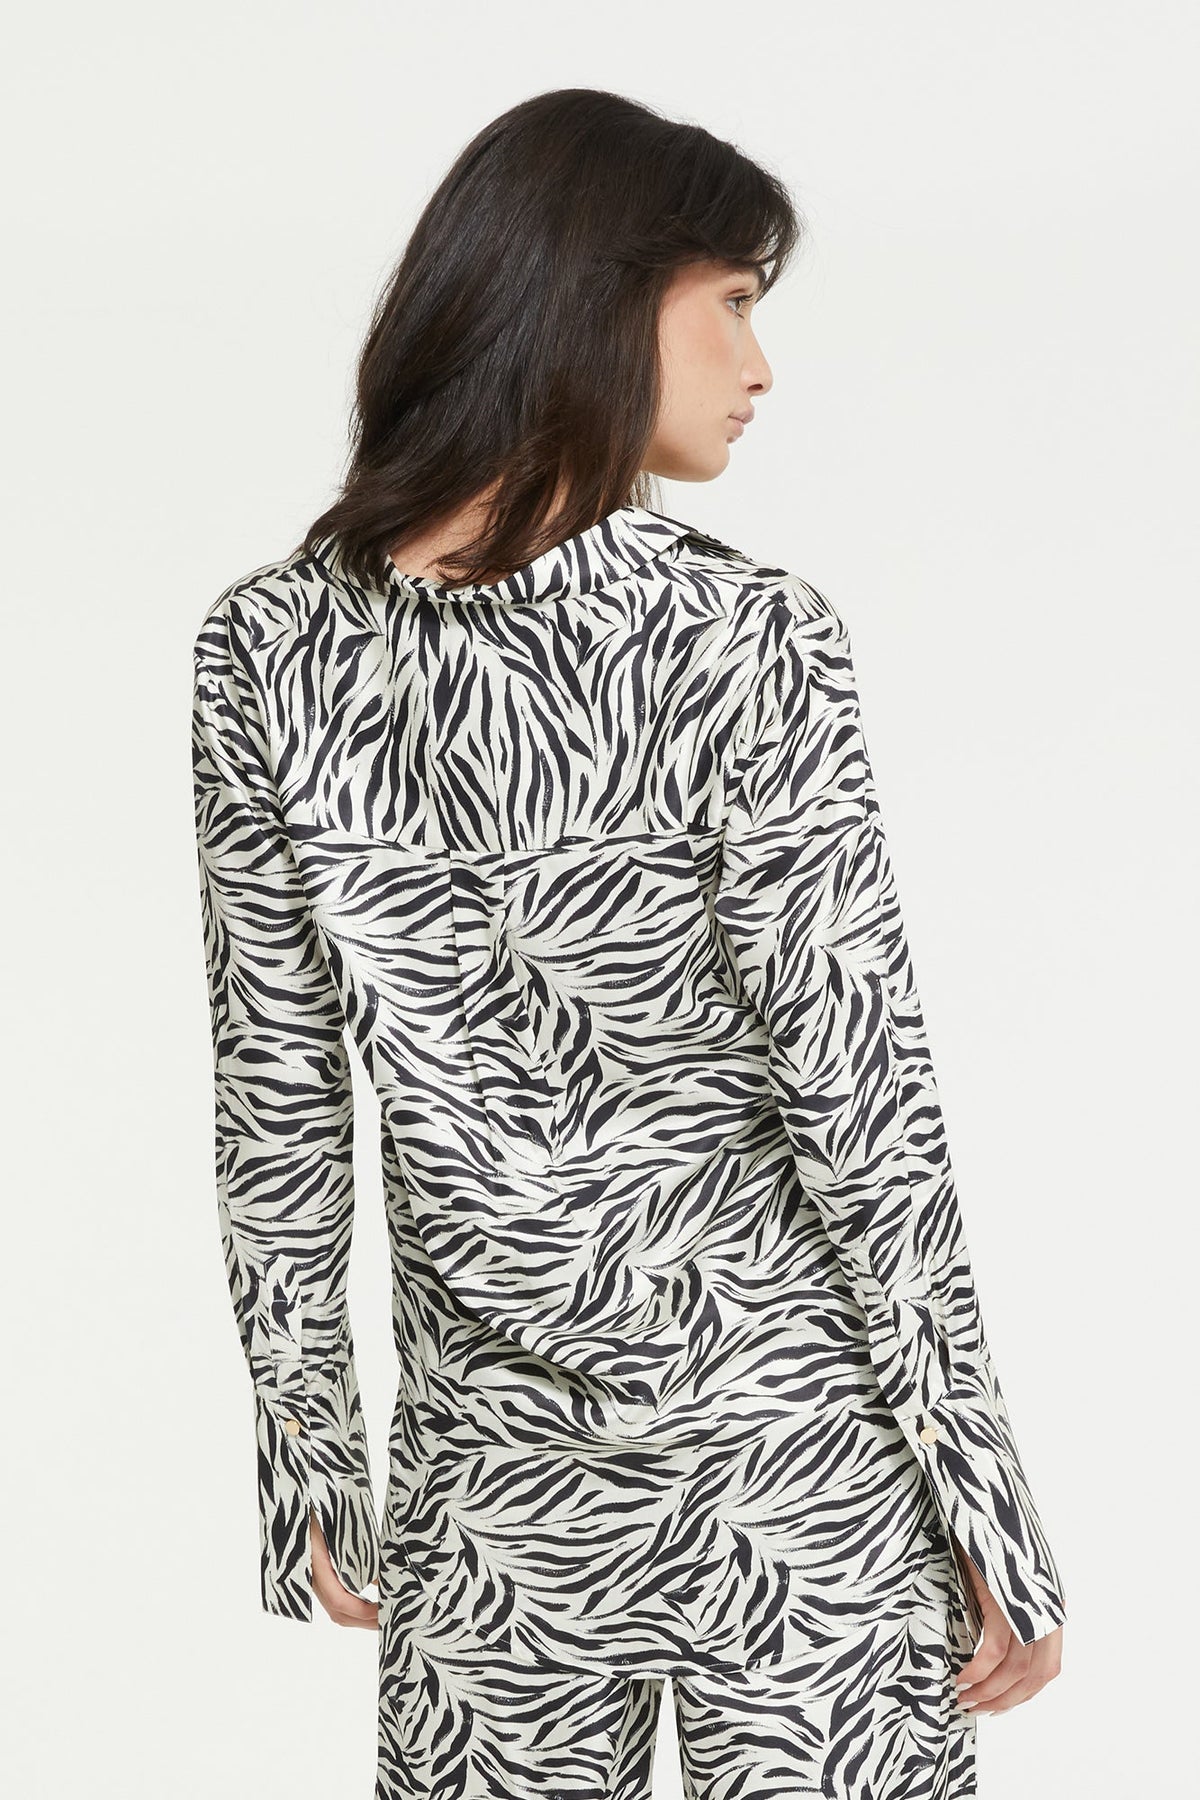 The Zafina Shirt in Brush Zebra Print by Ginia